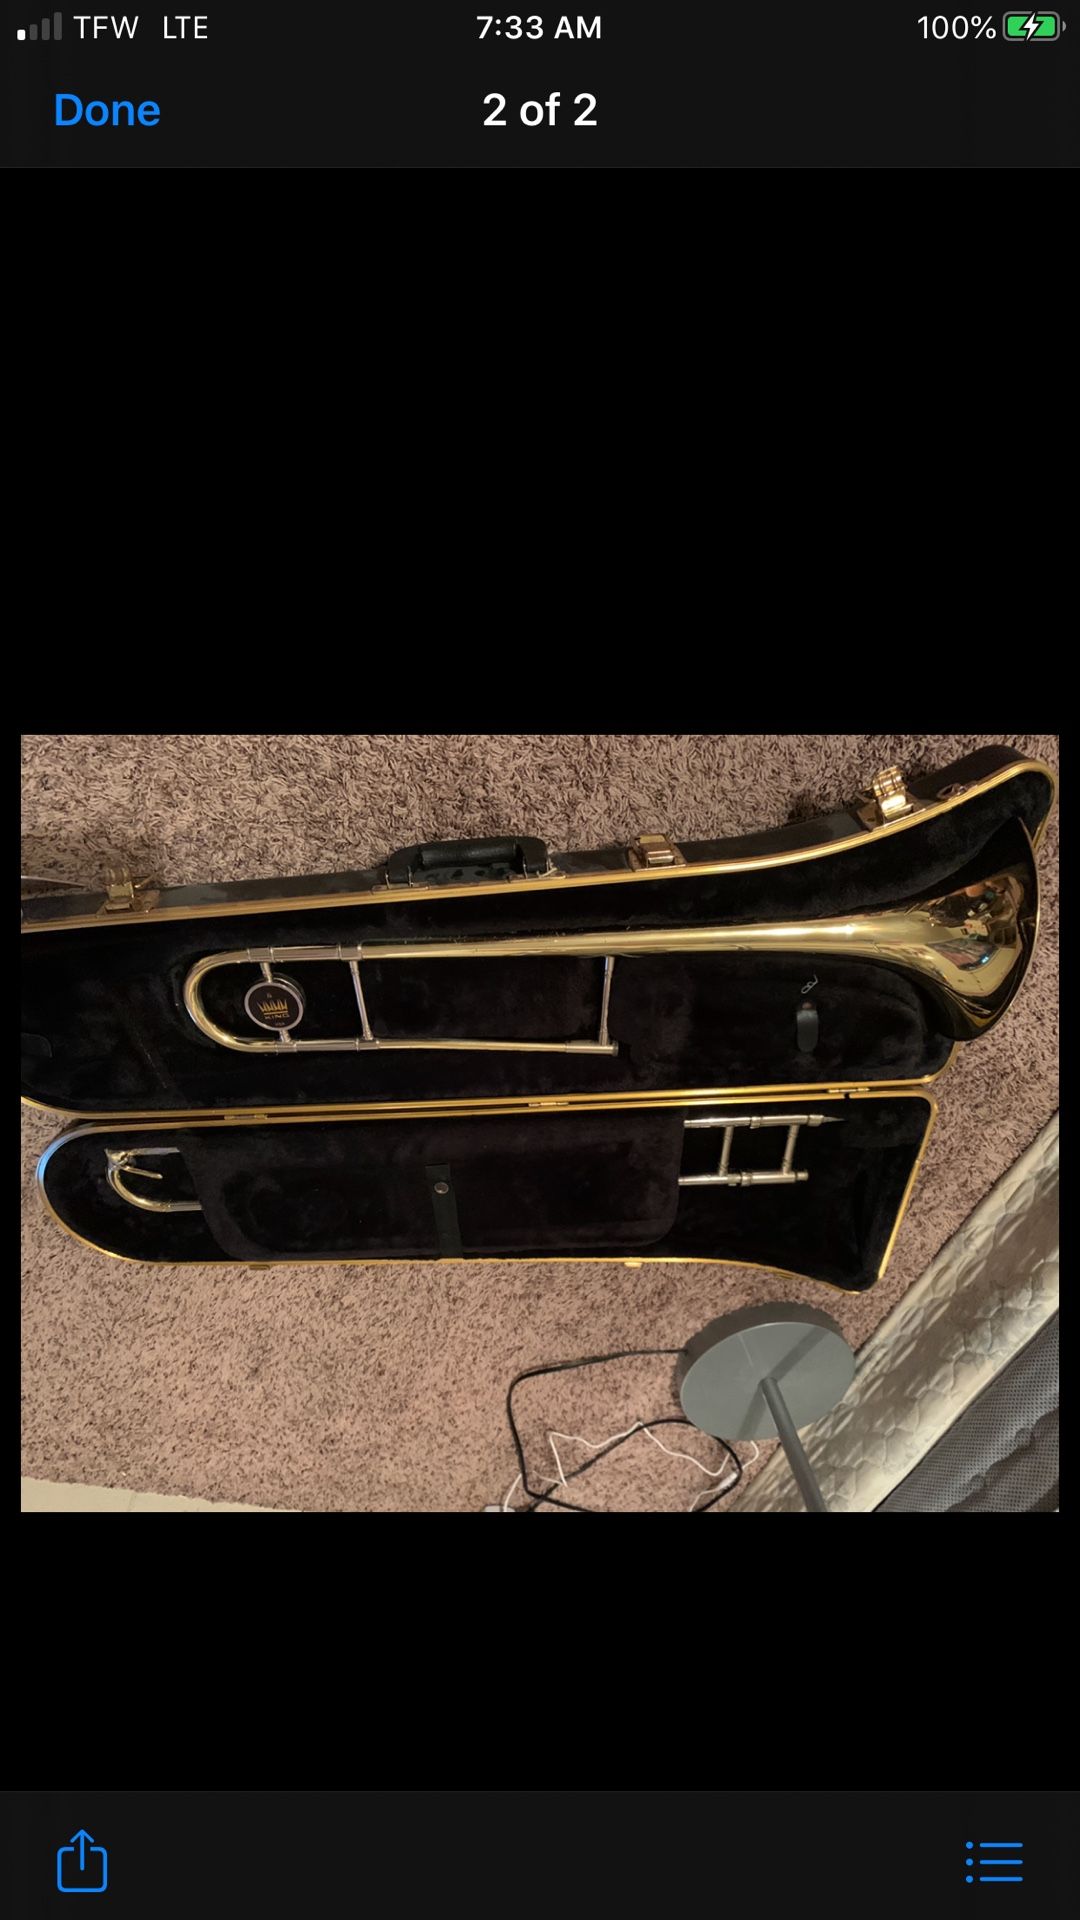 King 606 trombone